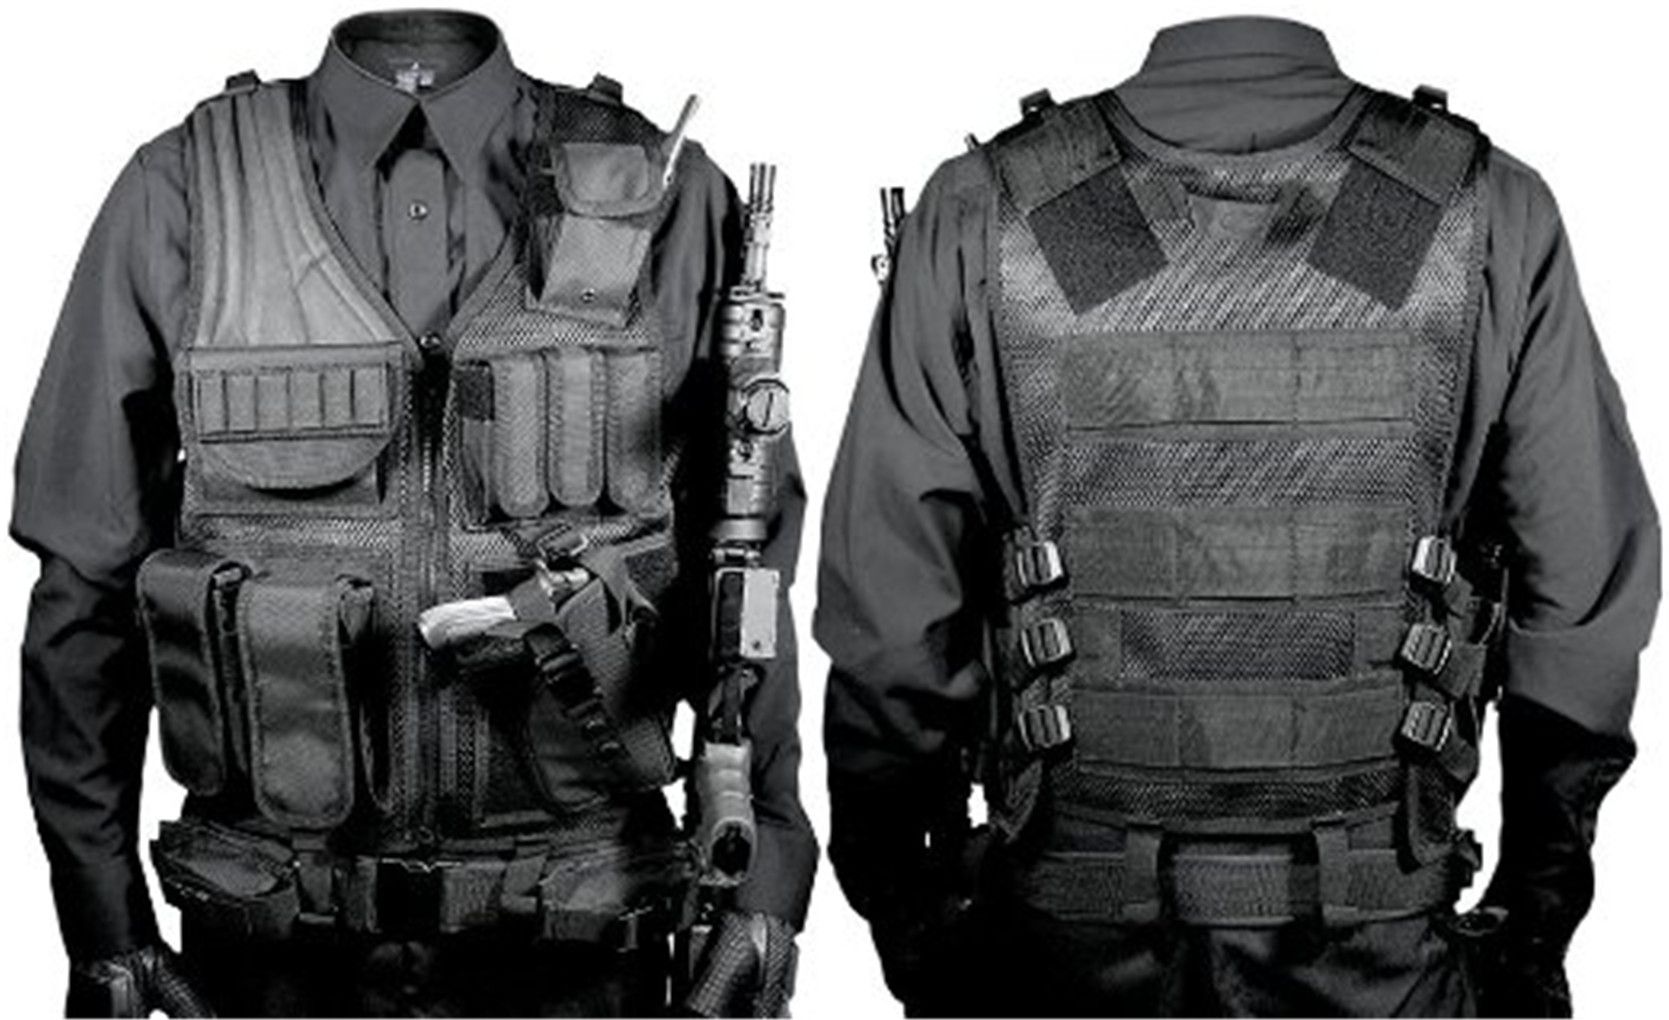 Sniper Tactical Gear South Africa | RLDM